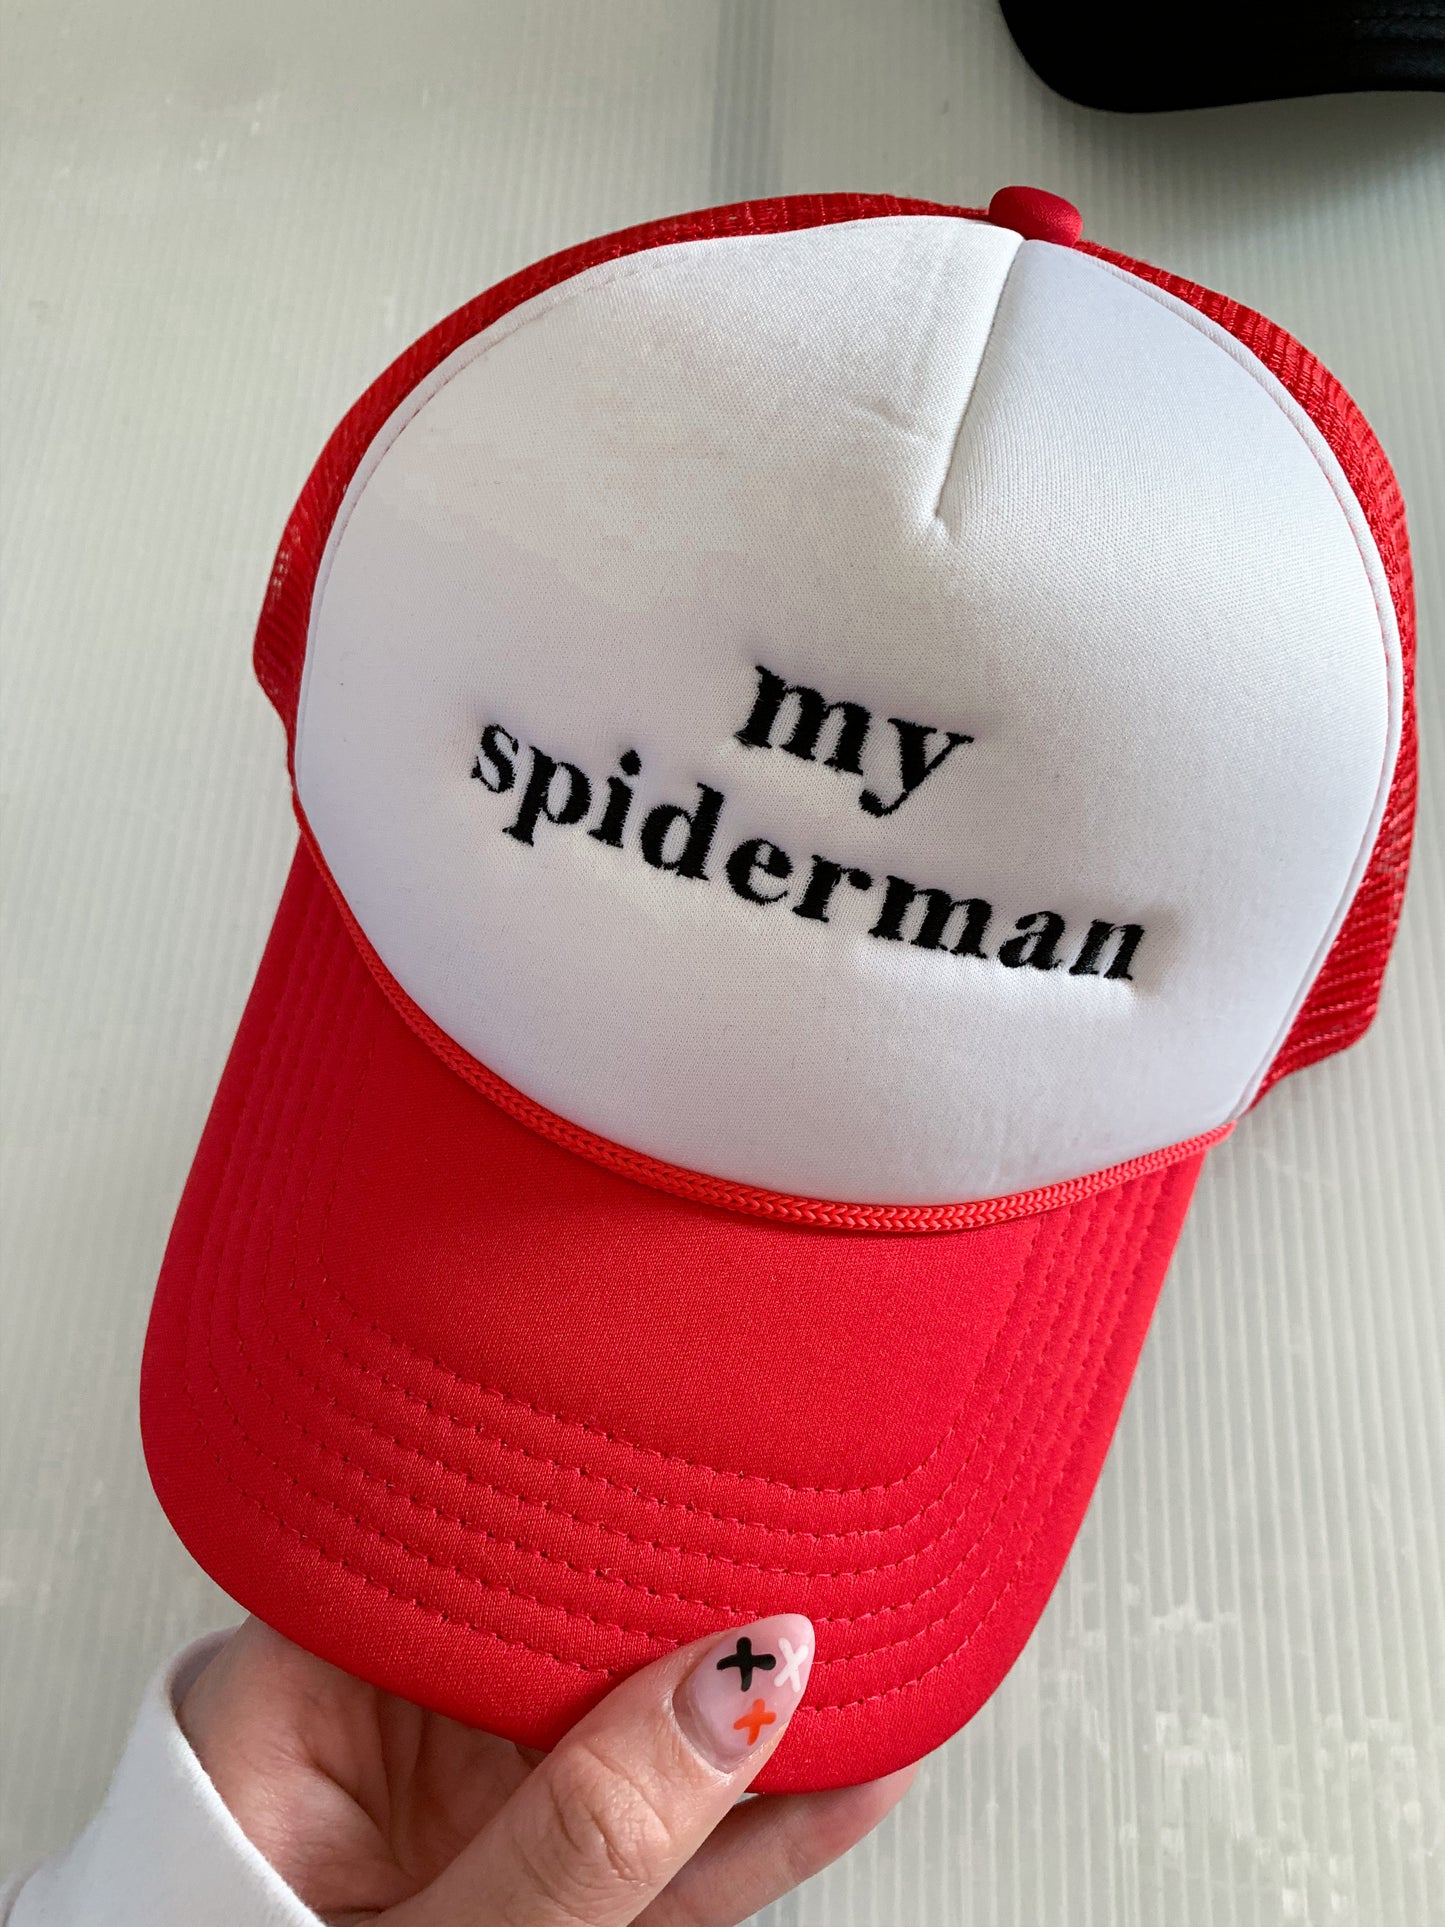 Spiderman and Mj Matching Trucker Hat Set